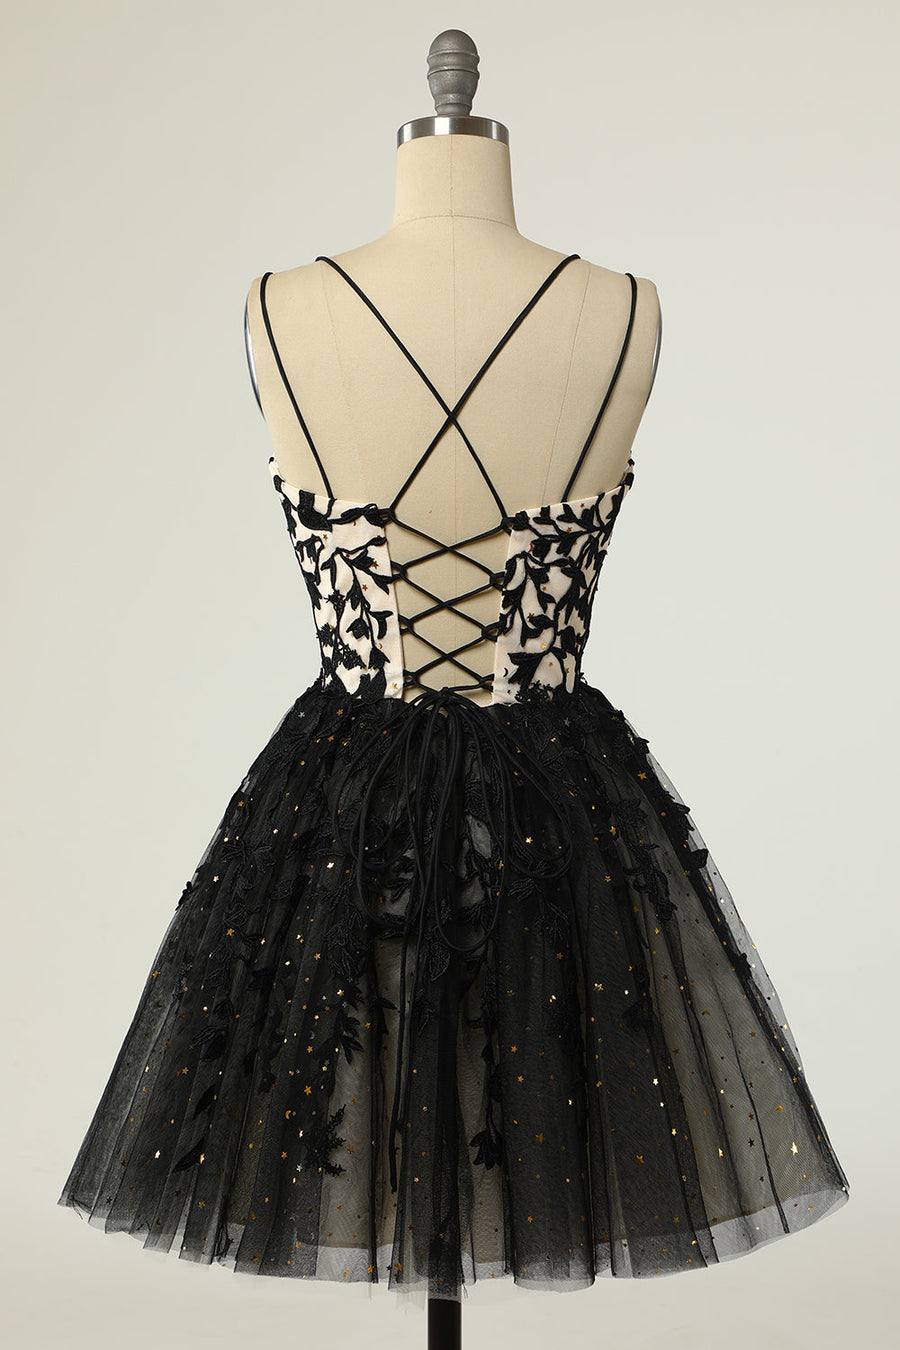 Princess Black Lace Appliques A-line Short Homecoming Dress